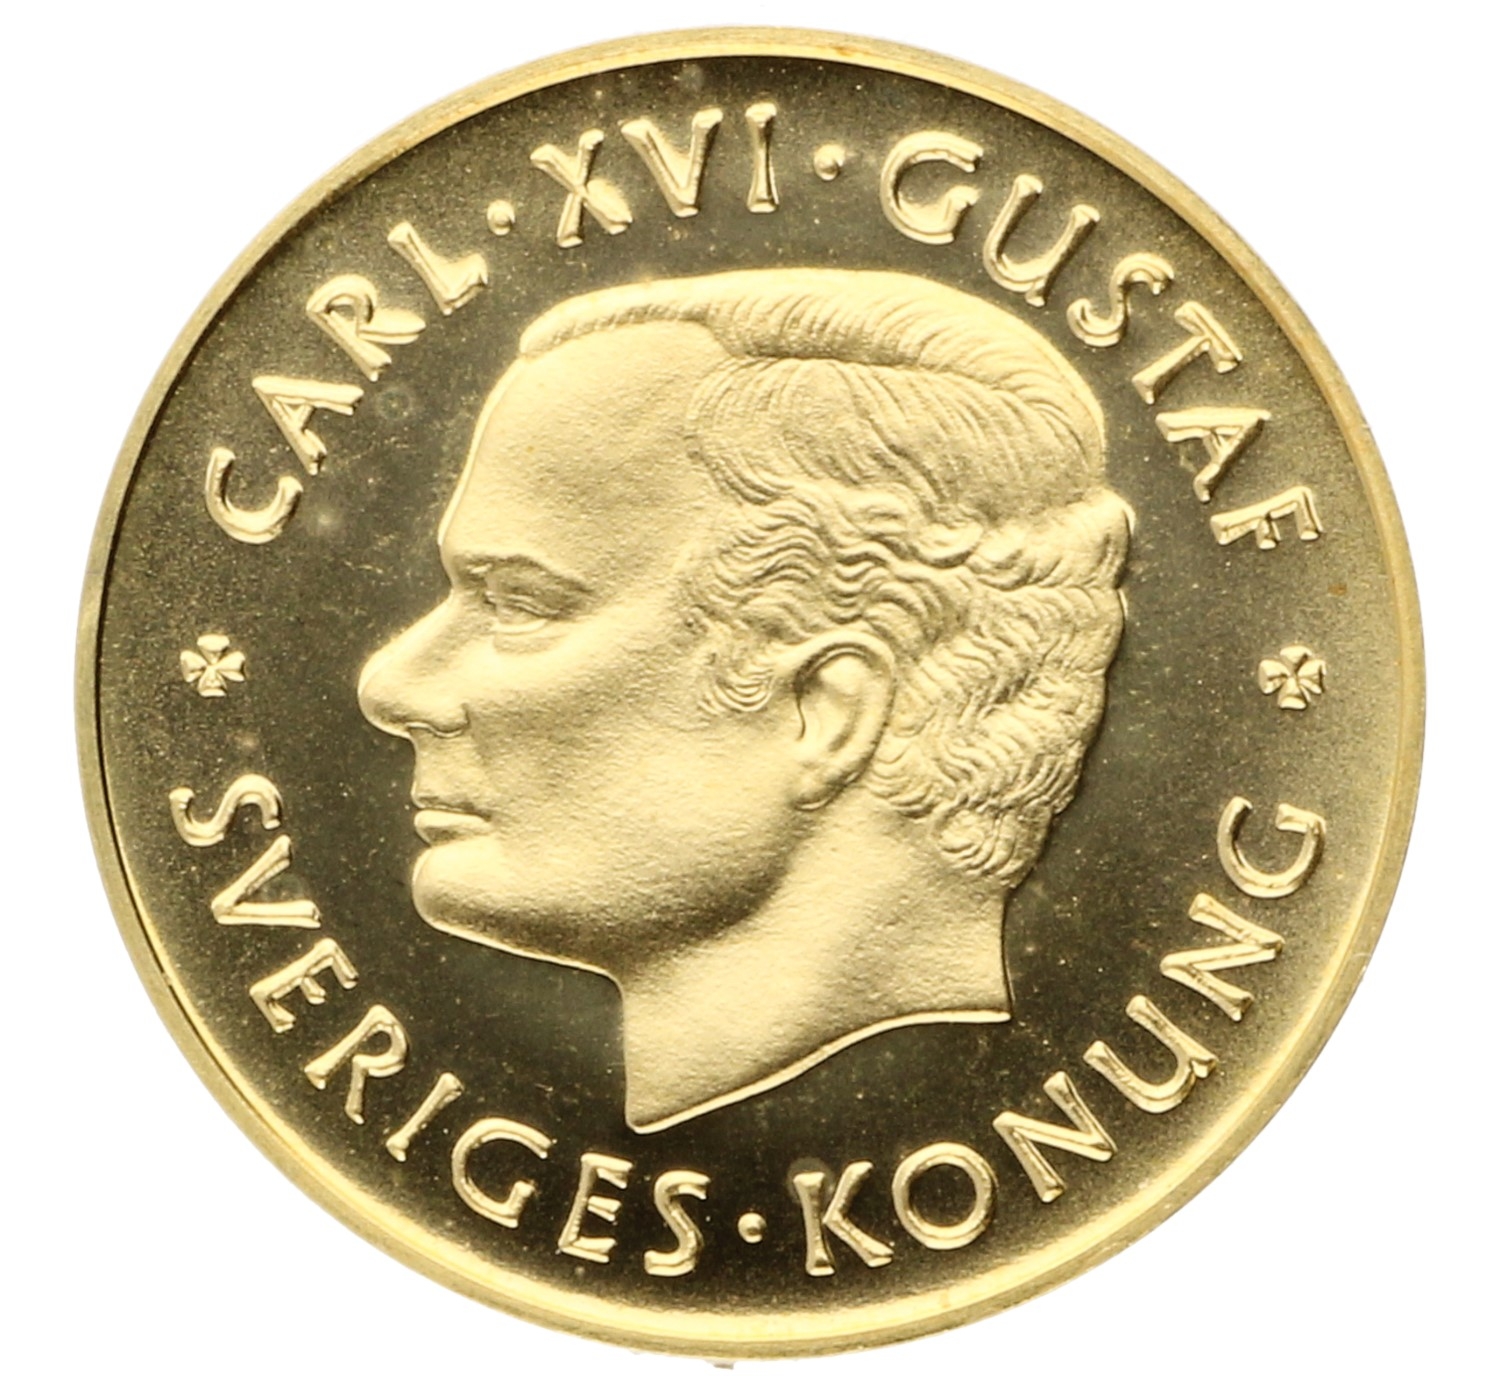 1000 Kronor - Sweden - 1995